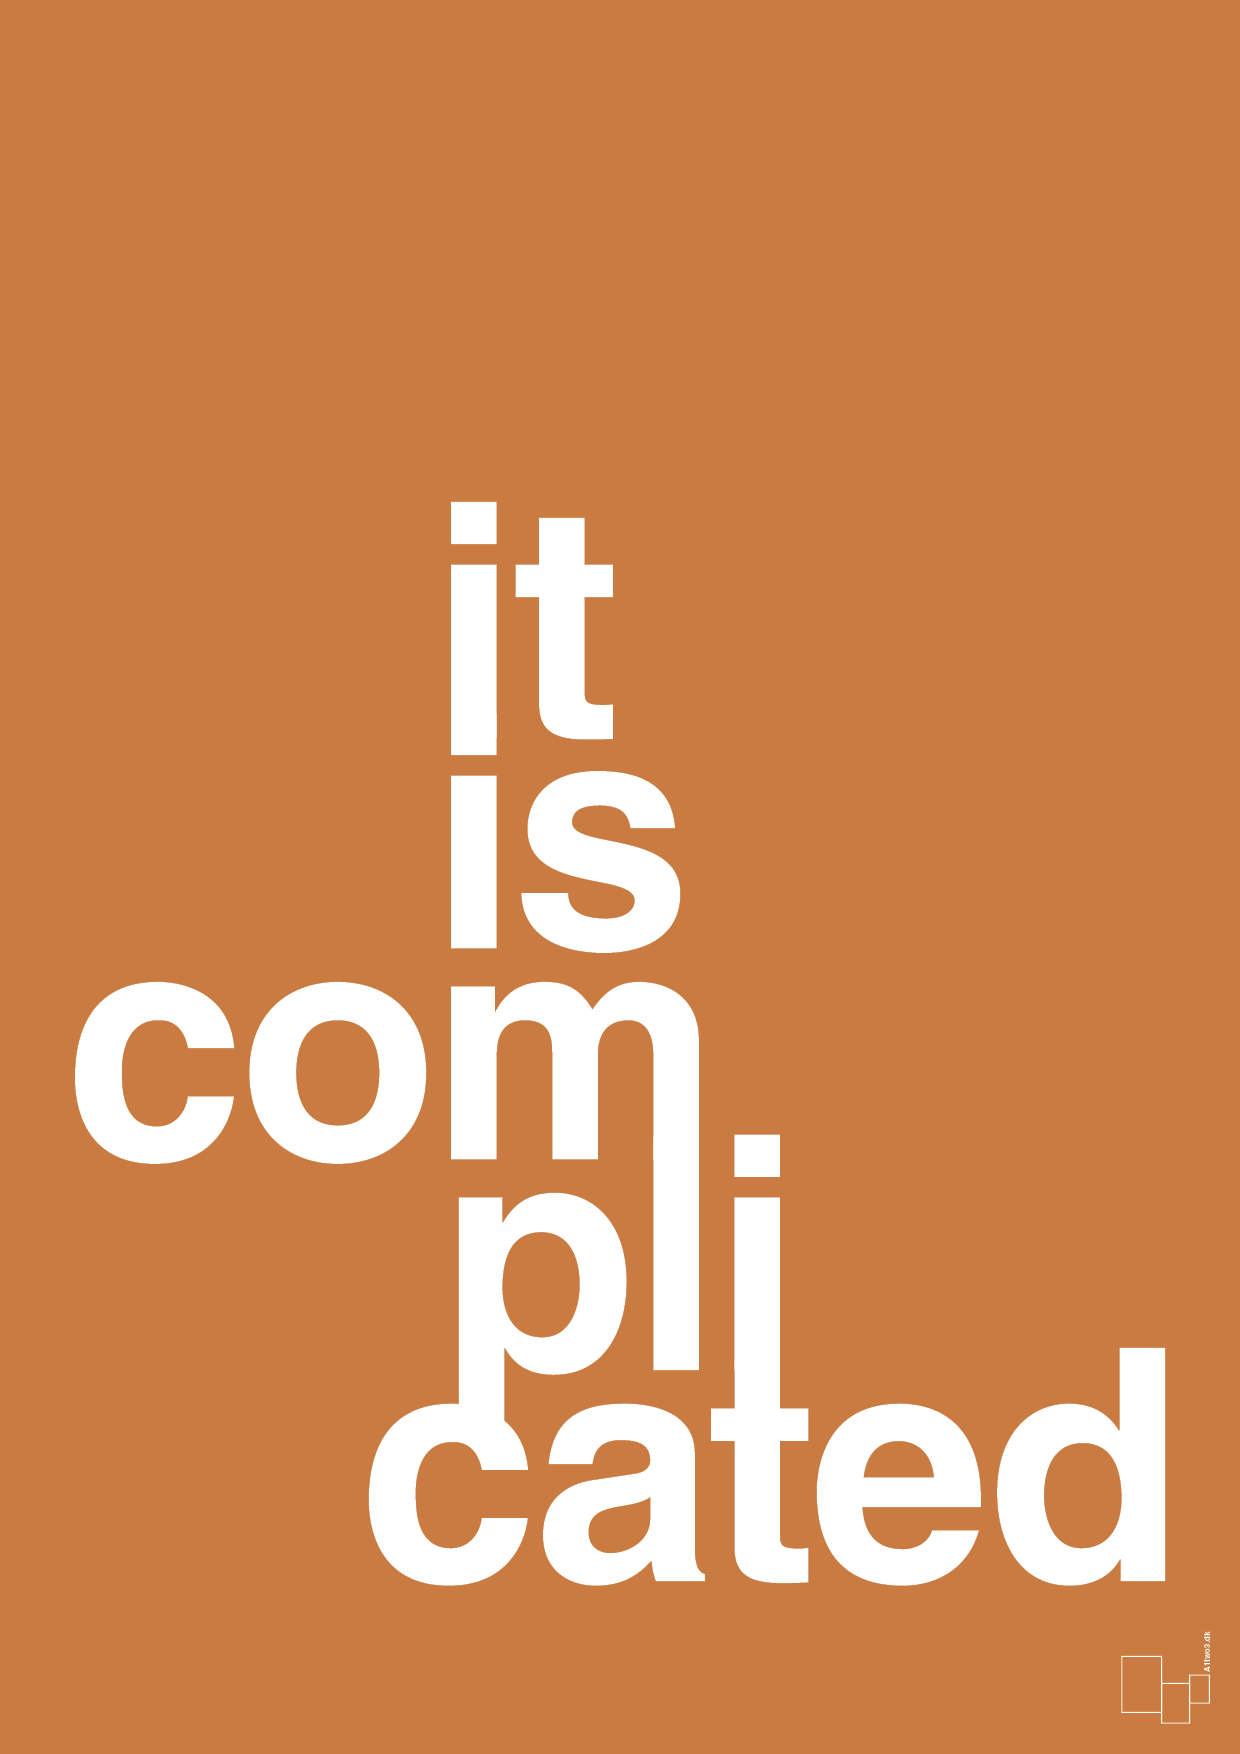 it is complicated - Plakat med Ordsprog i Rumba Orange